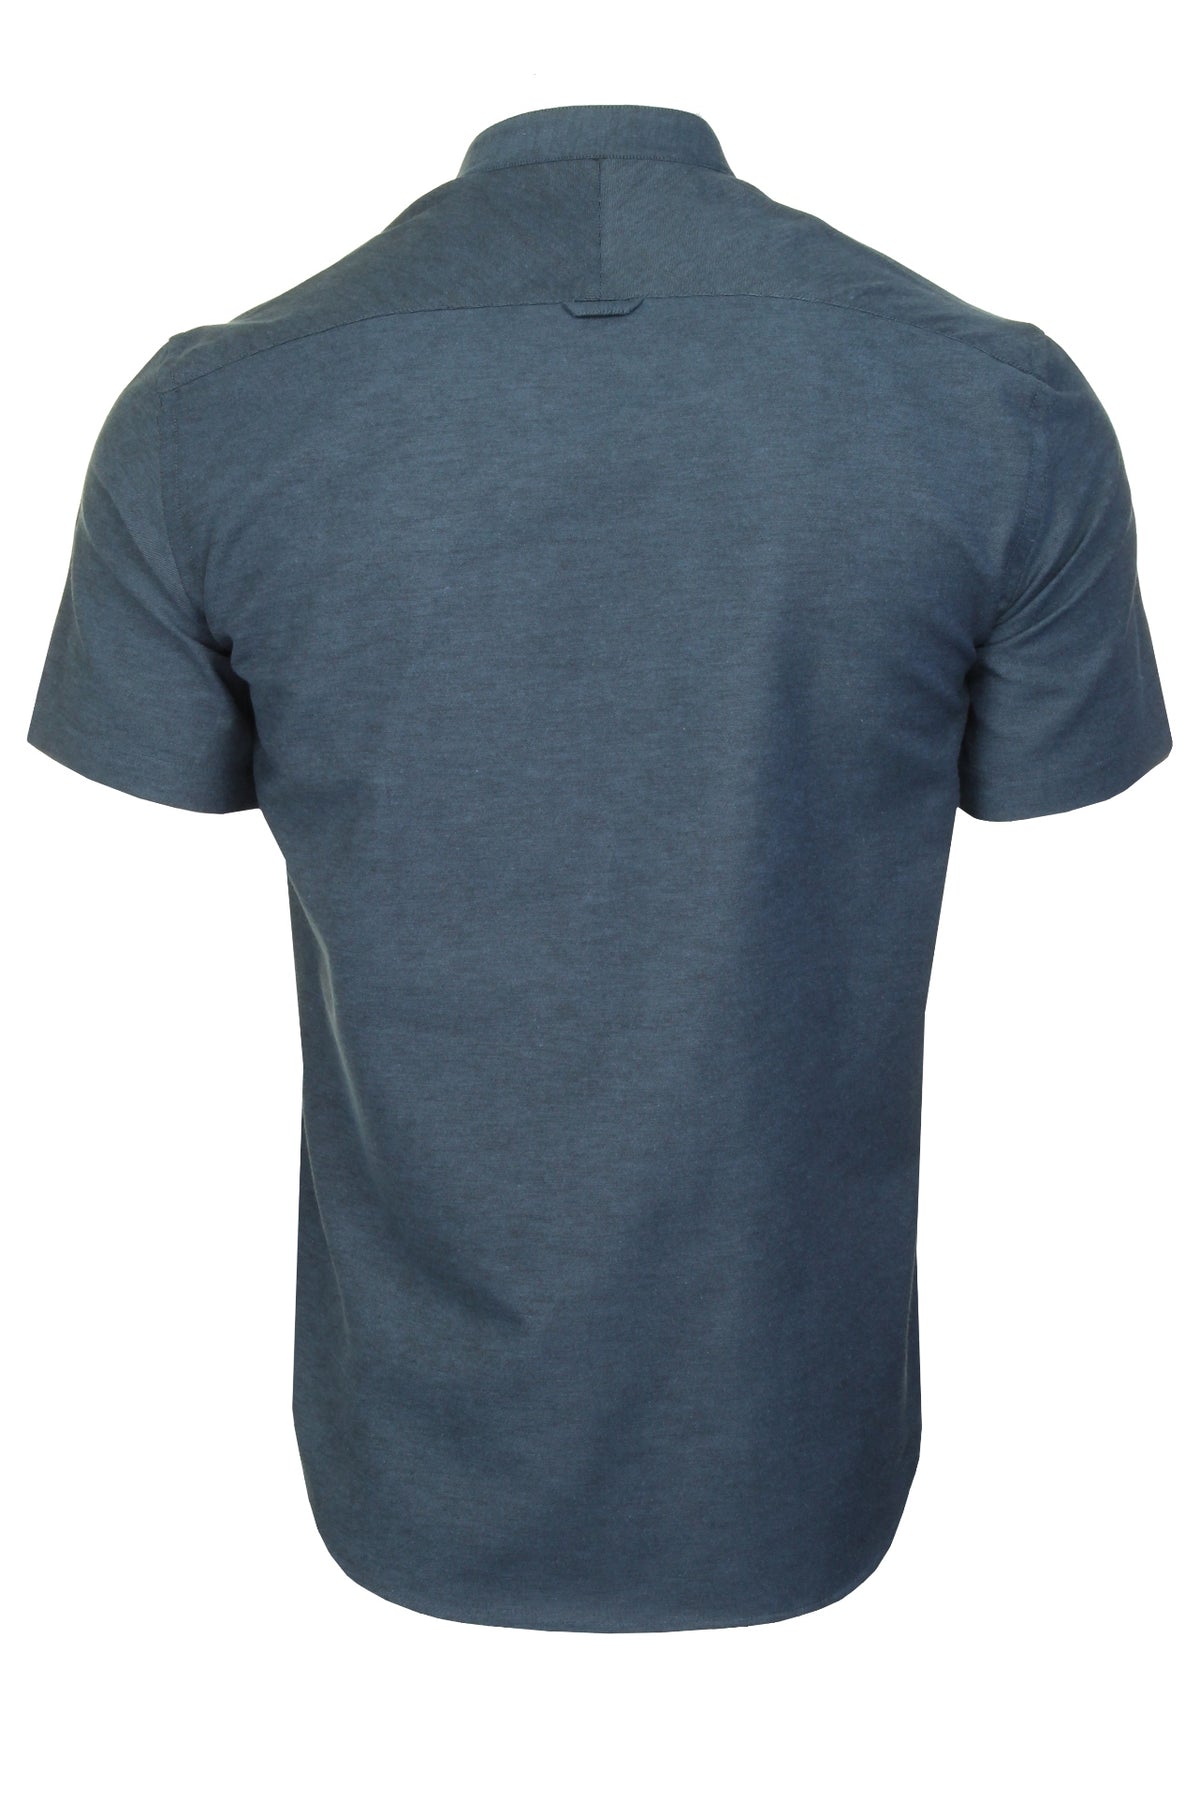 Xact Men's Grandad Collar Oxford Shirt Slim Fit Short Sleeved, 03, Xsh1022, Denim Blue